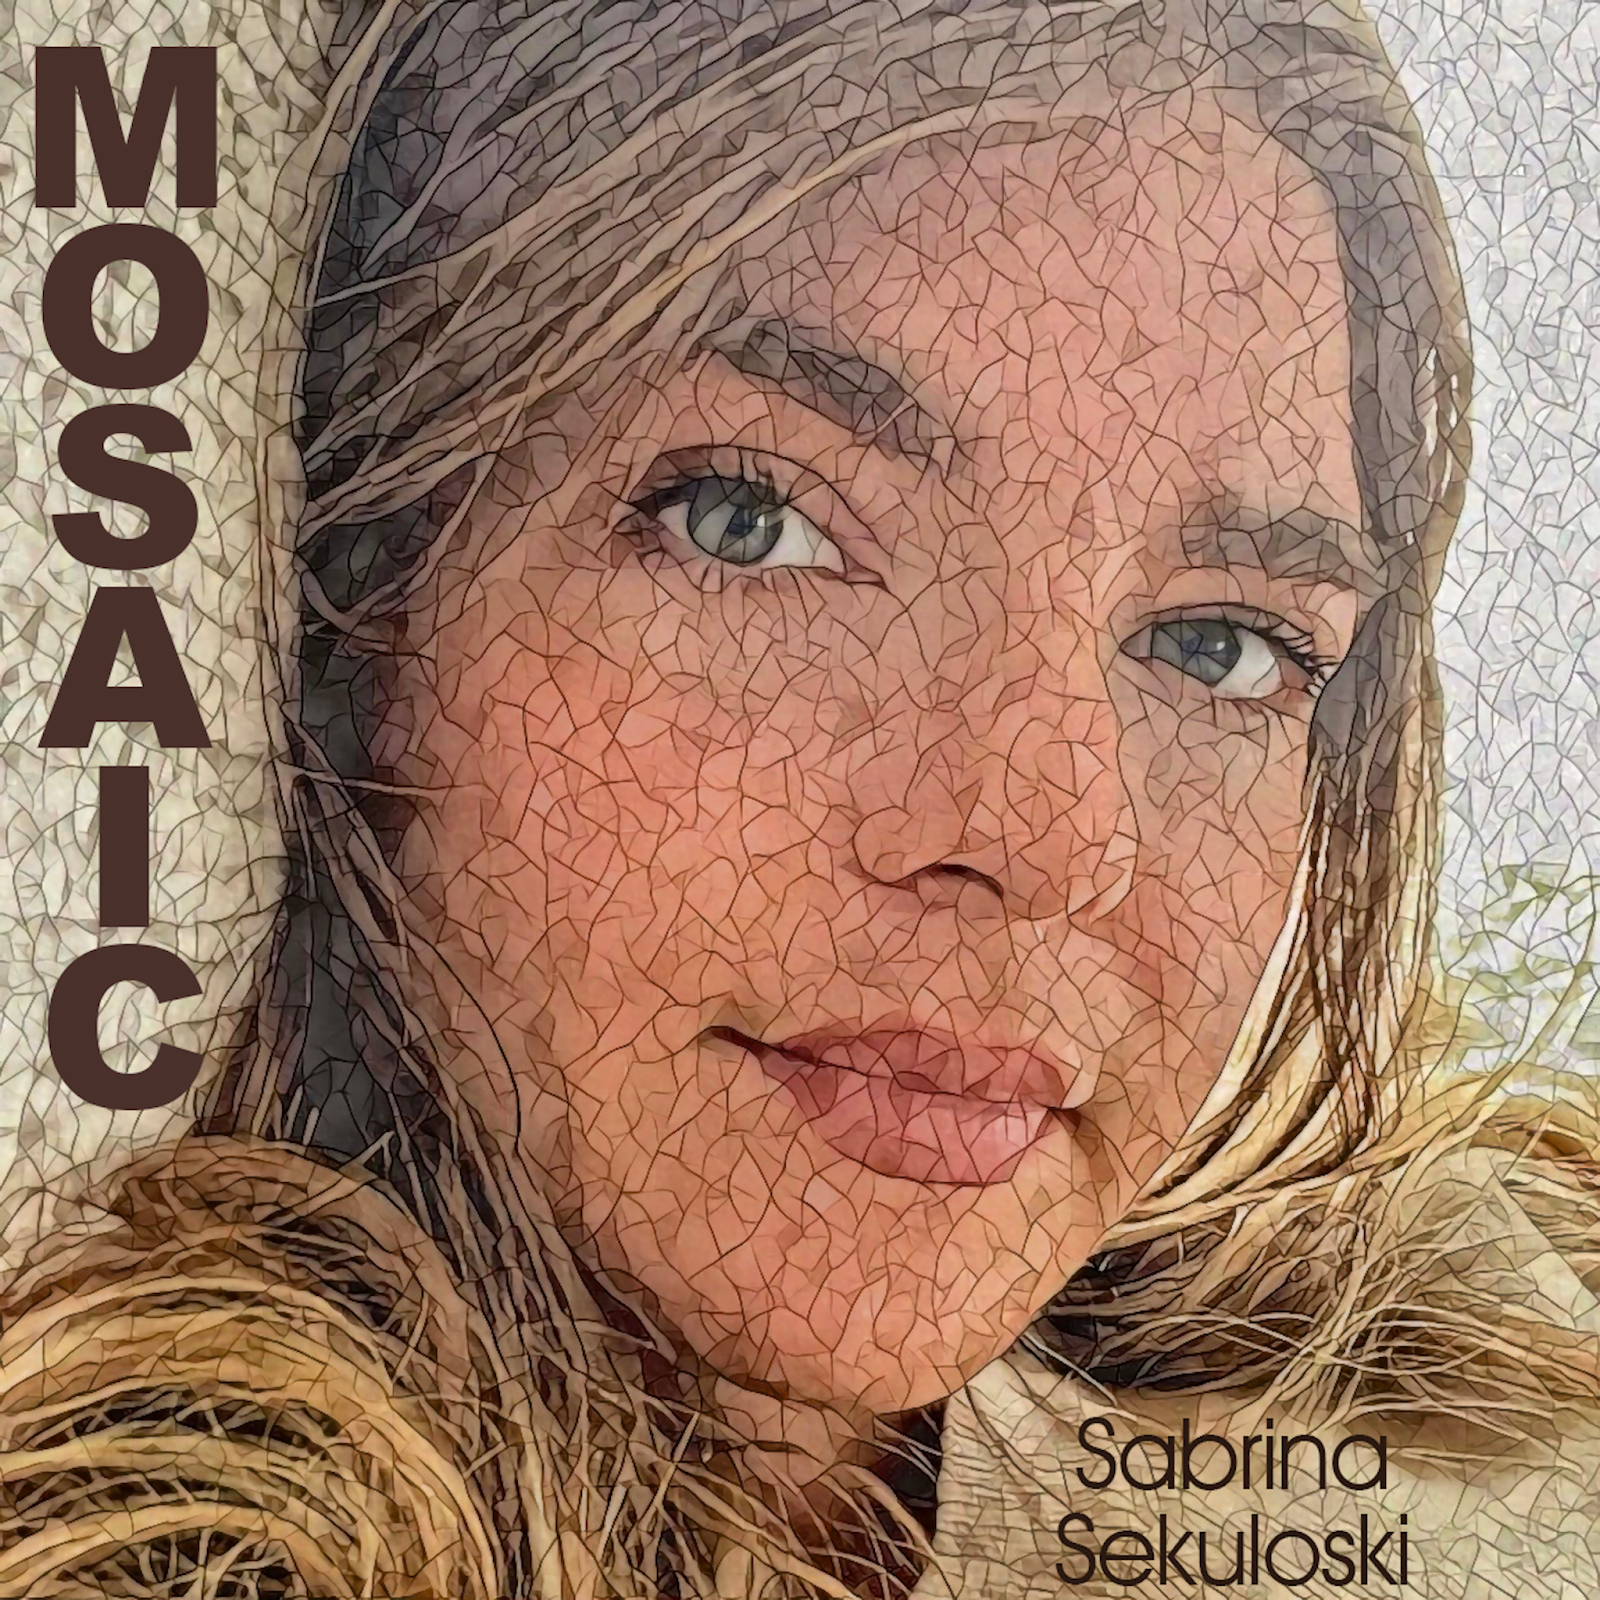 Sabrina Sekuloski "mosaic"